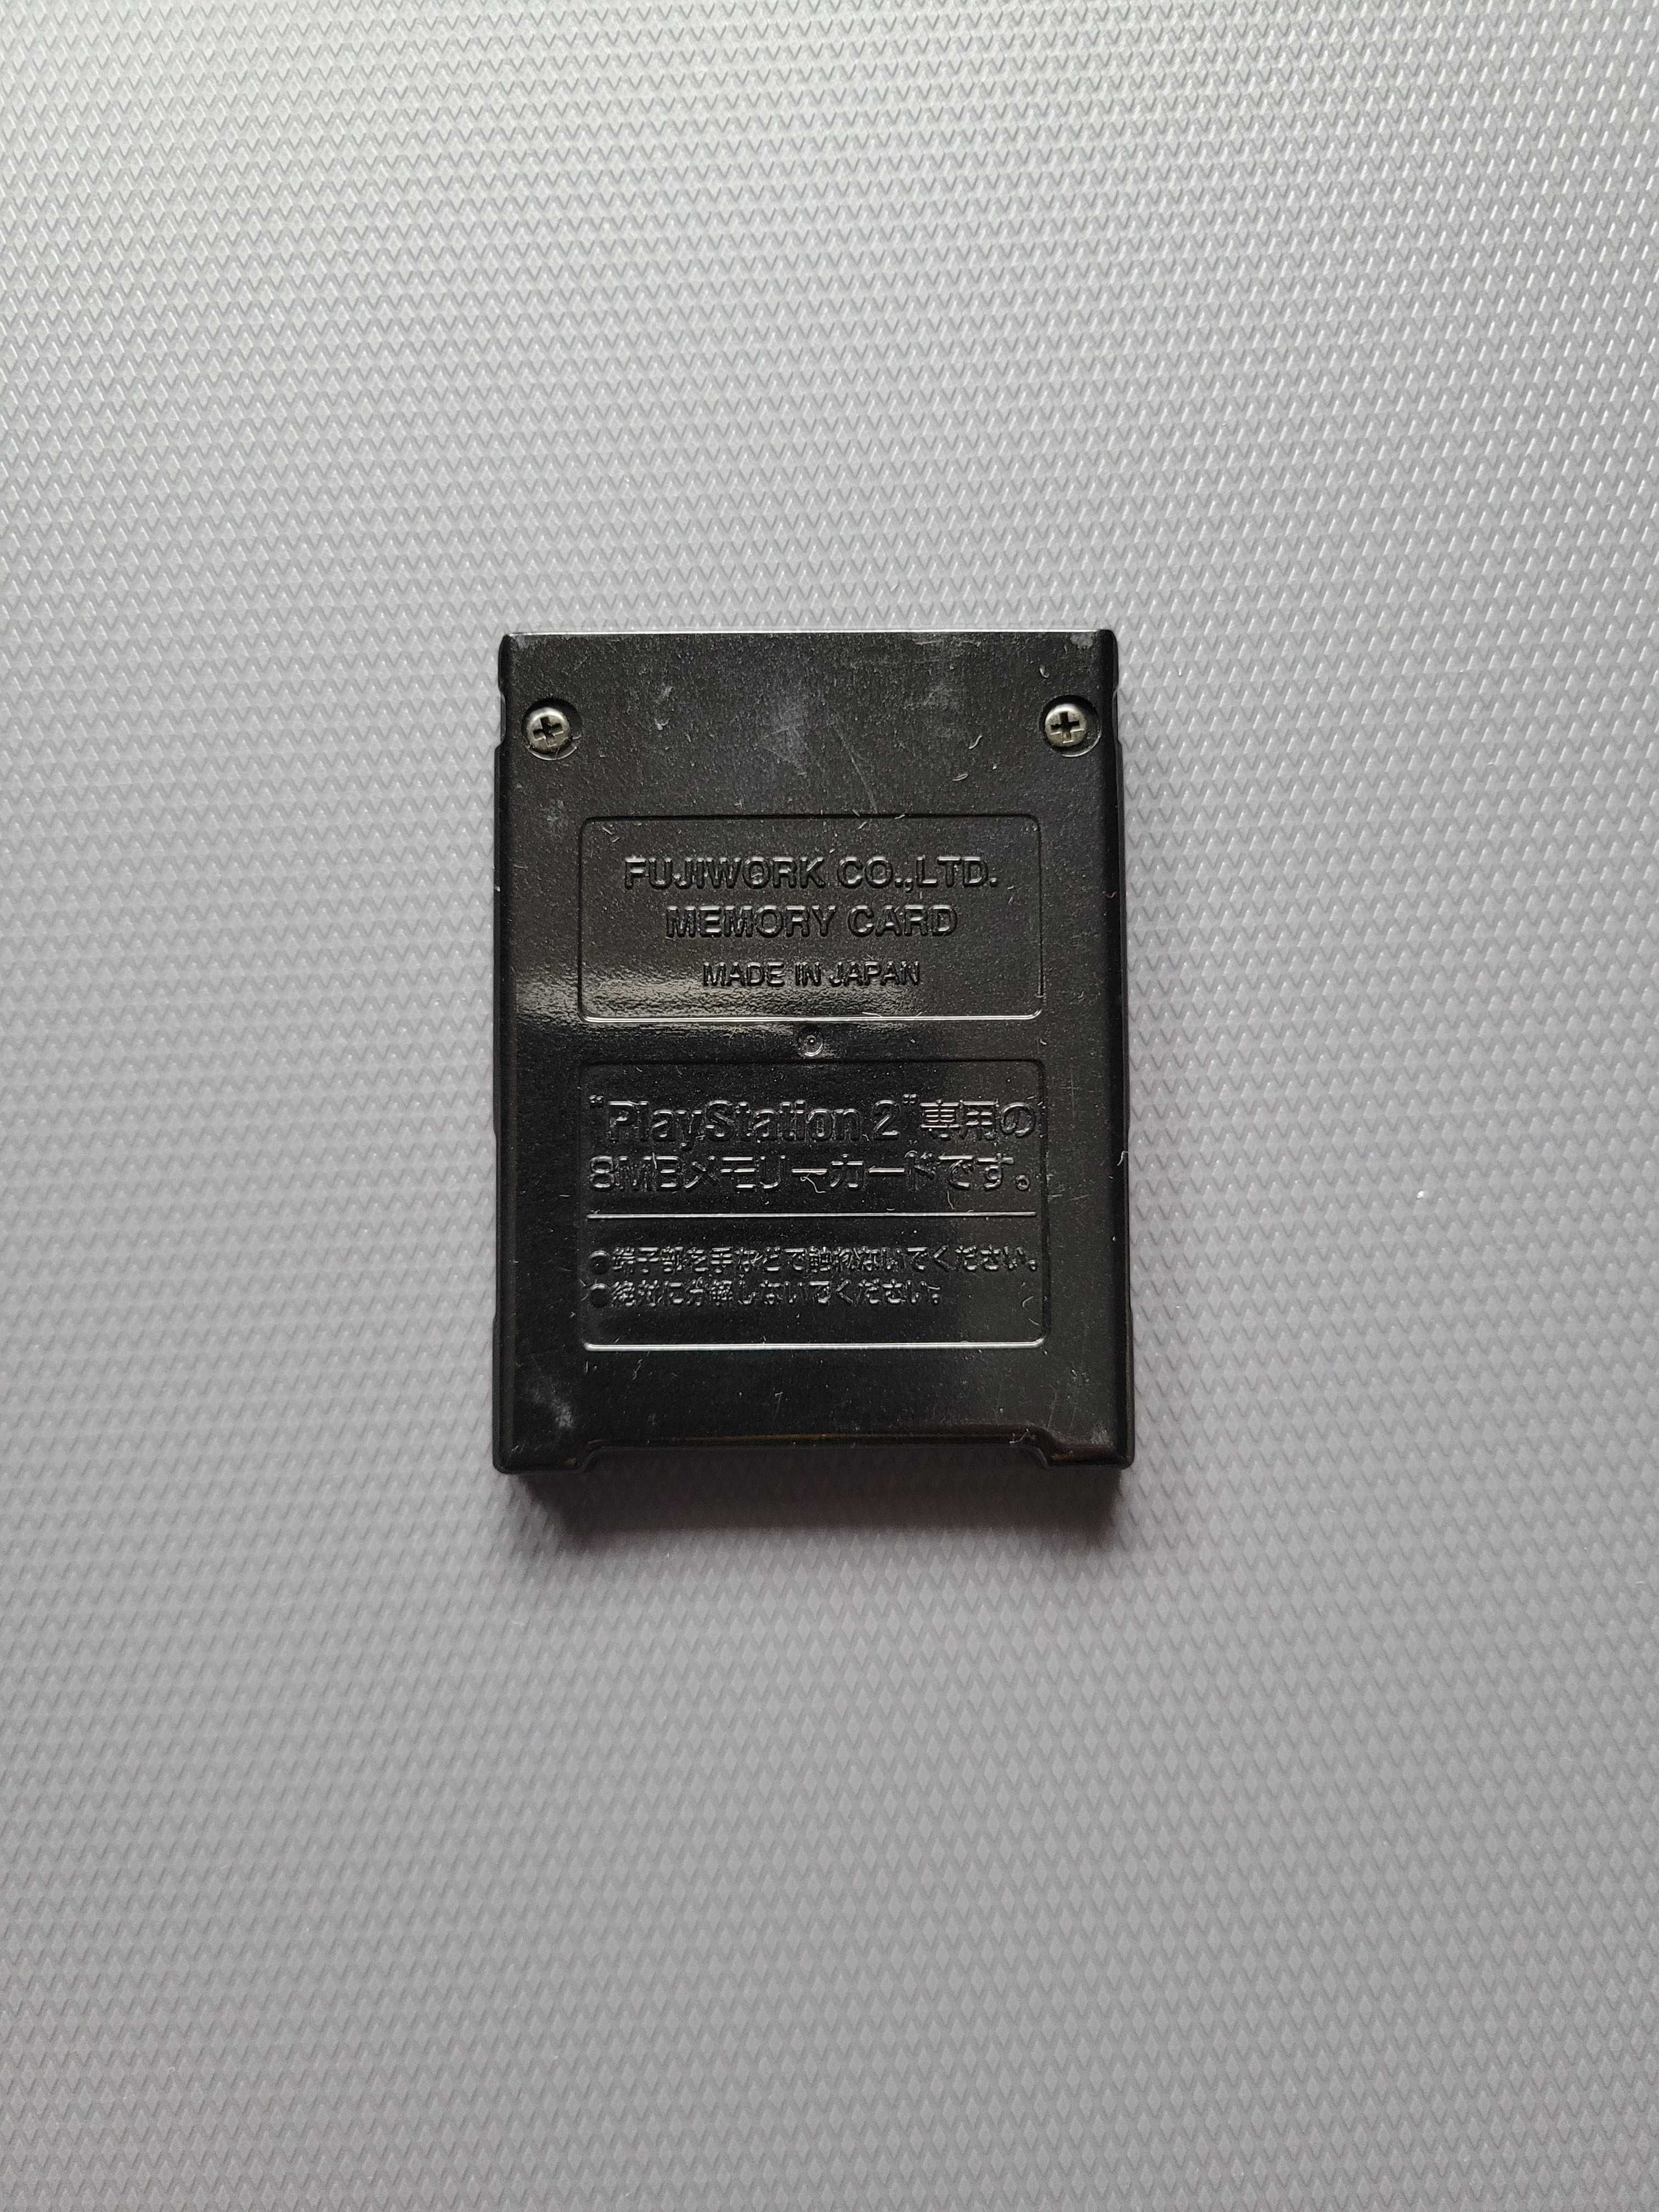 Karta pamięci Fujiwork MagicGate PlayStation 2 PS2 Black